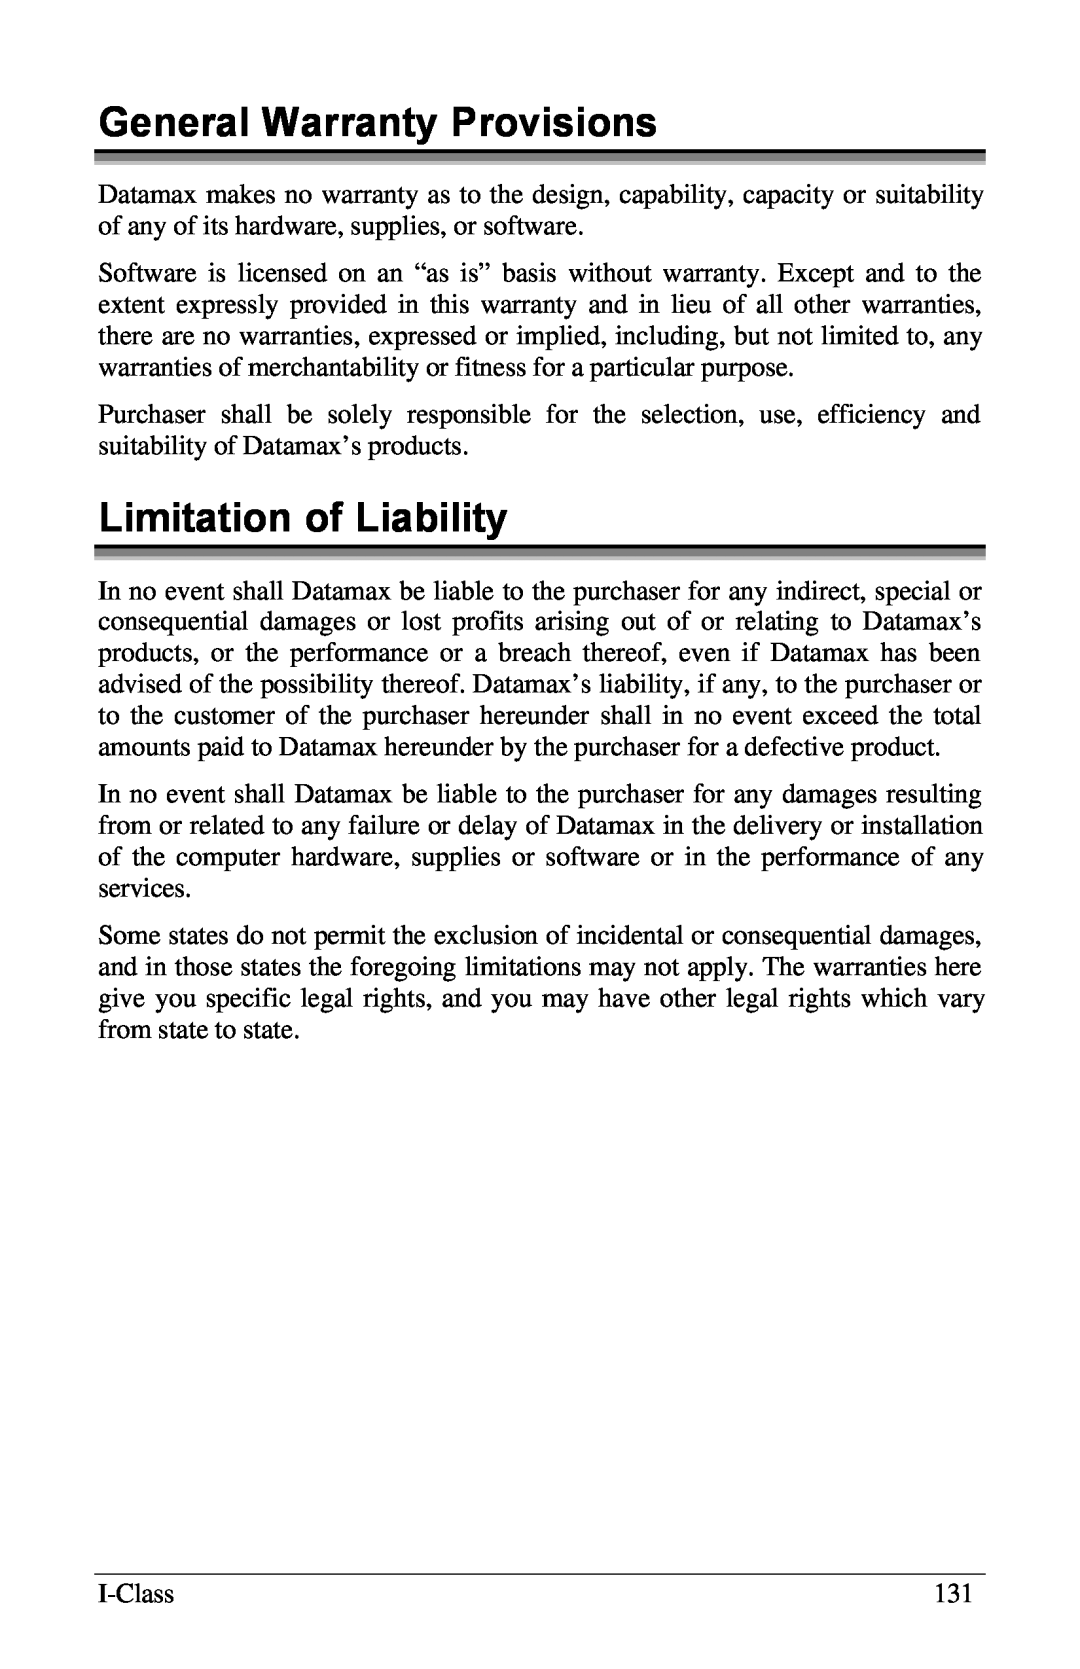 Xerox I Class manual General Warranty Provisions, Limitation of Liability 